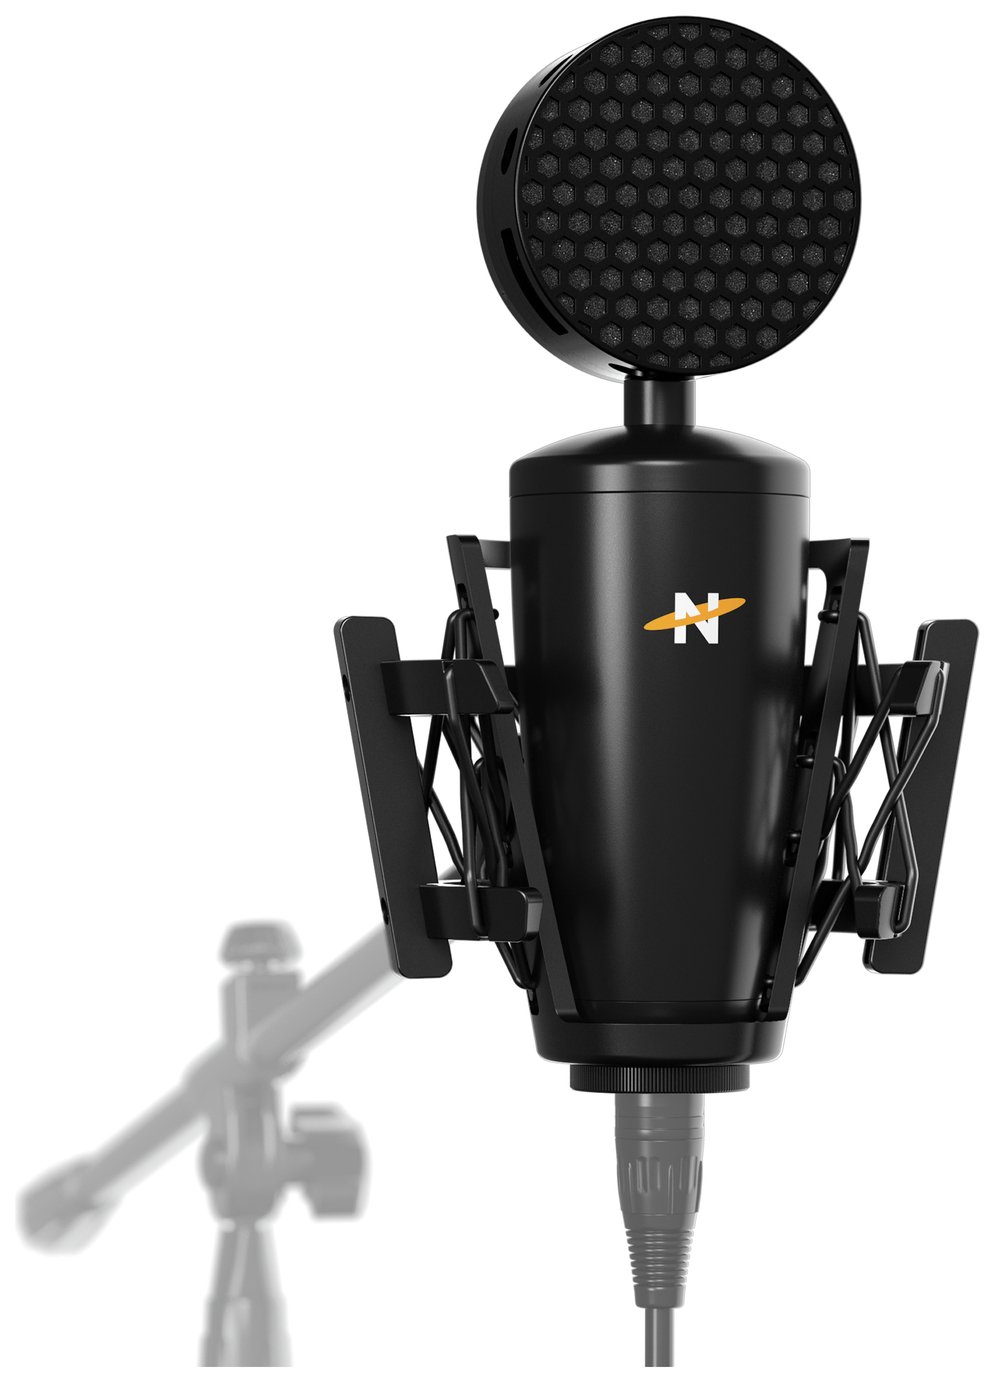 Neat King Bee II Wired Microphone - Black